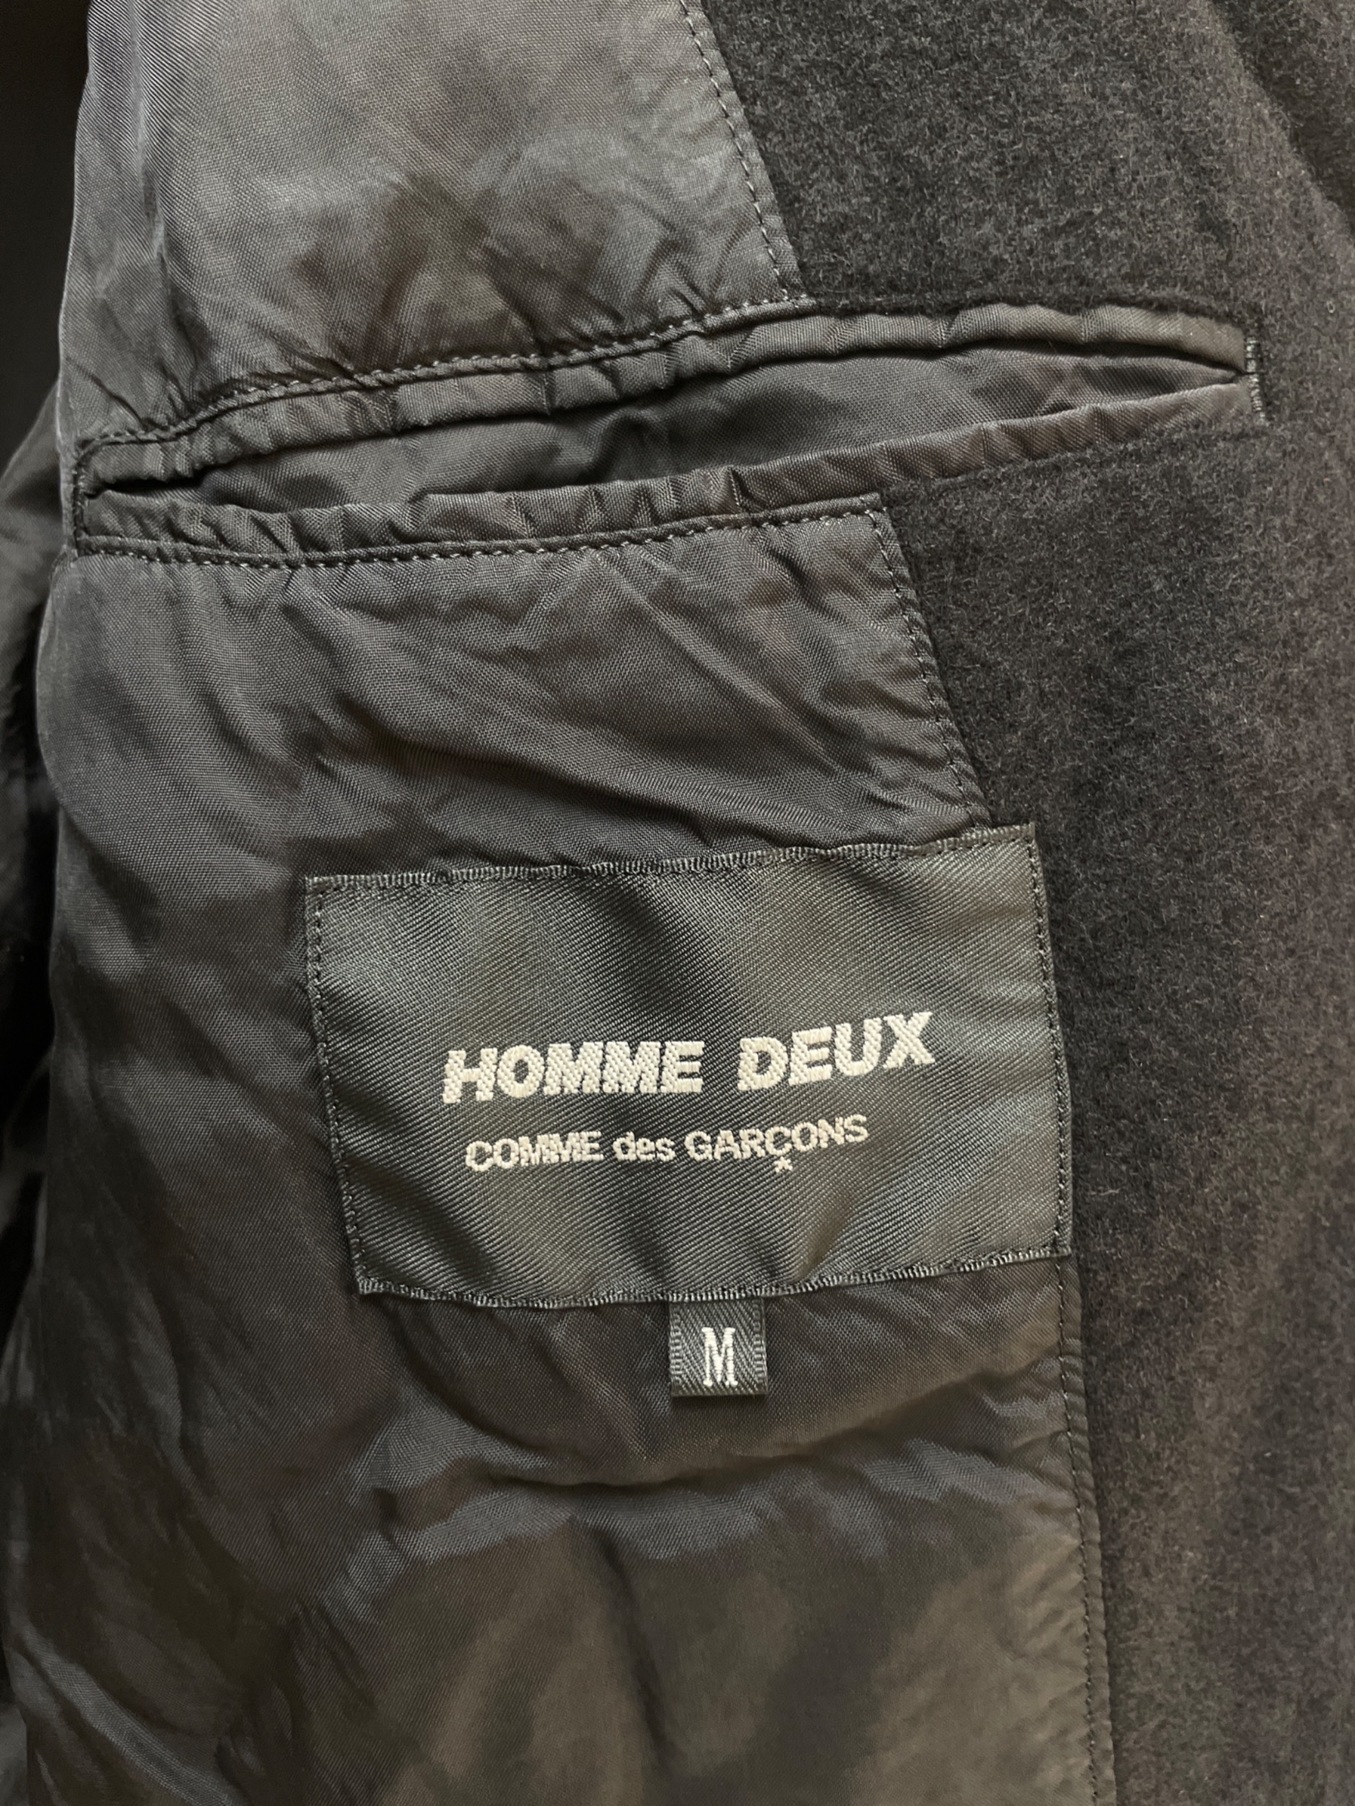 COMME des GARCONS HOMME DEUX (コムデギャルソン オム ドゥ) ウール製品加工ジャケット ブラック サイズ:M